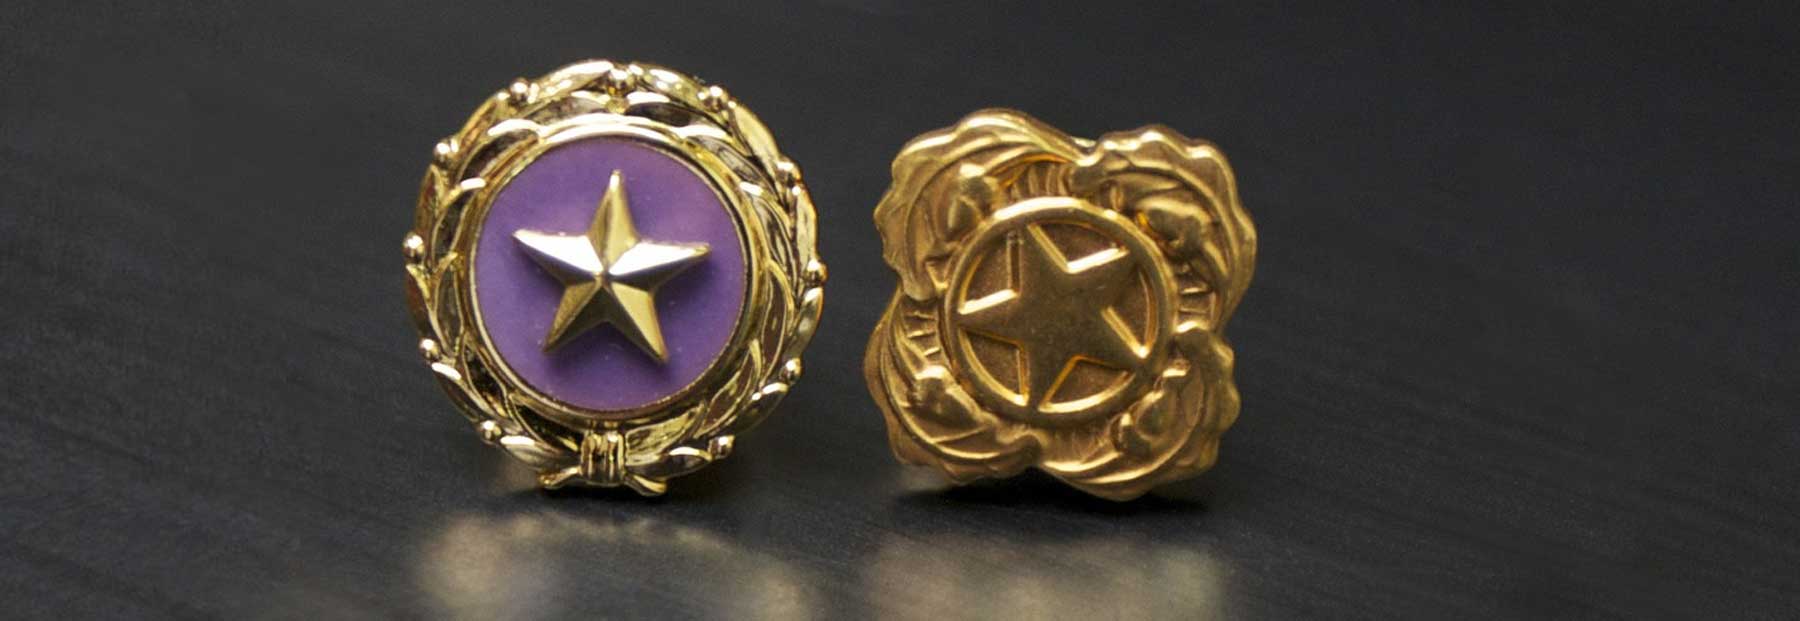 Gold Star pins